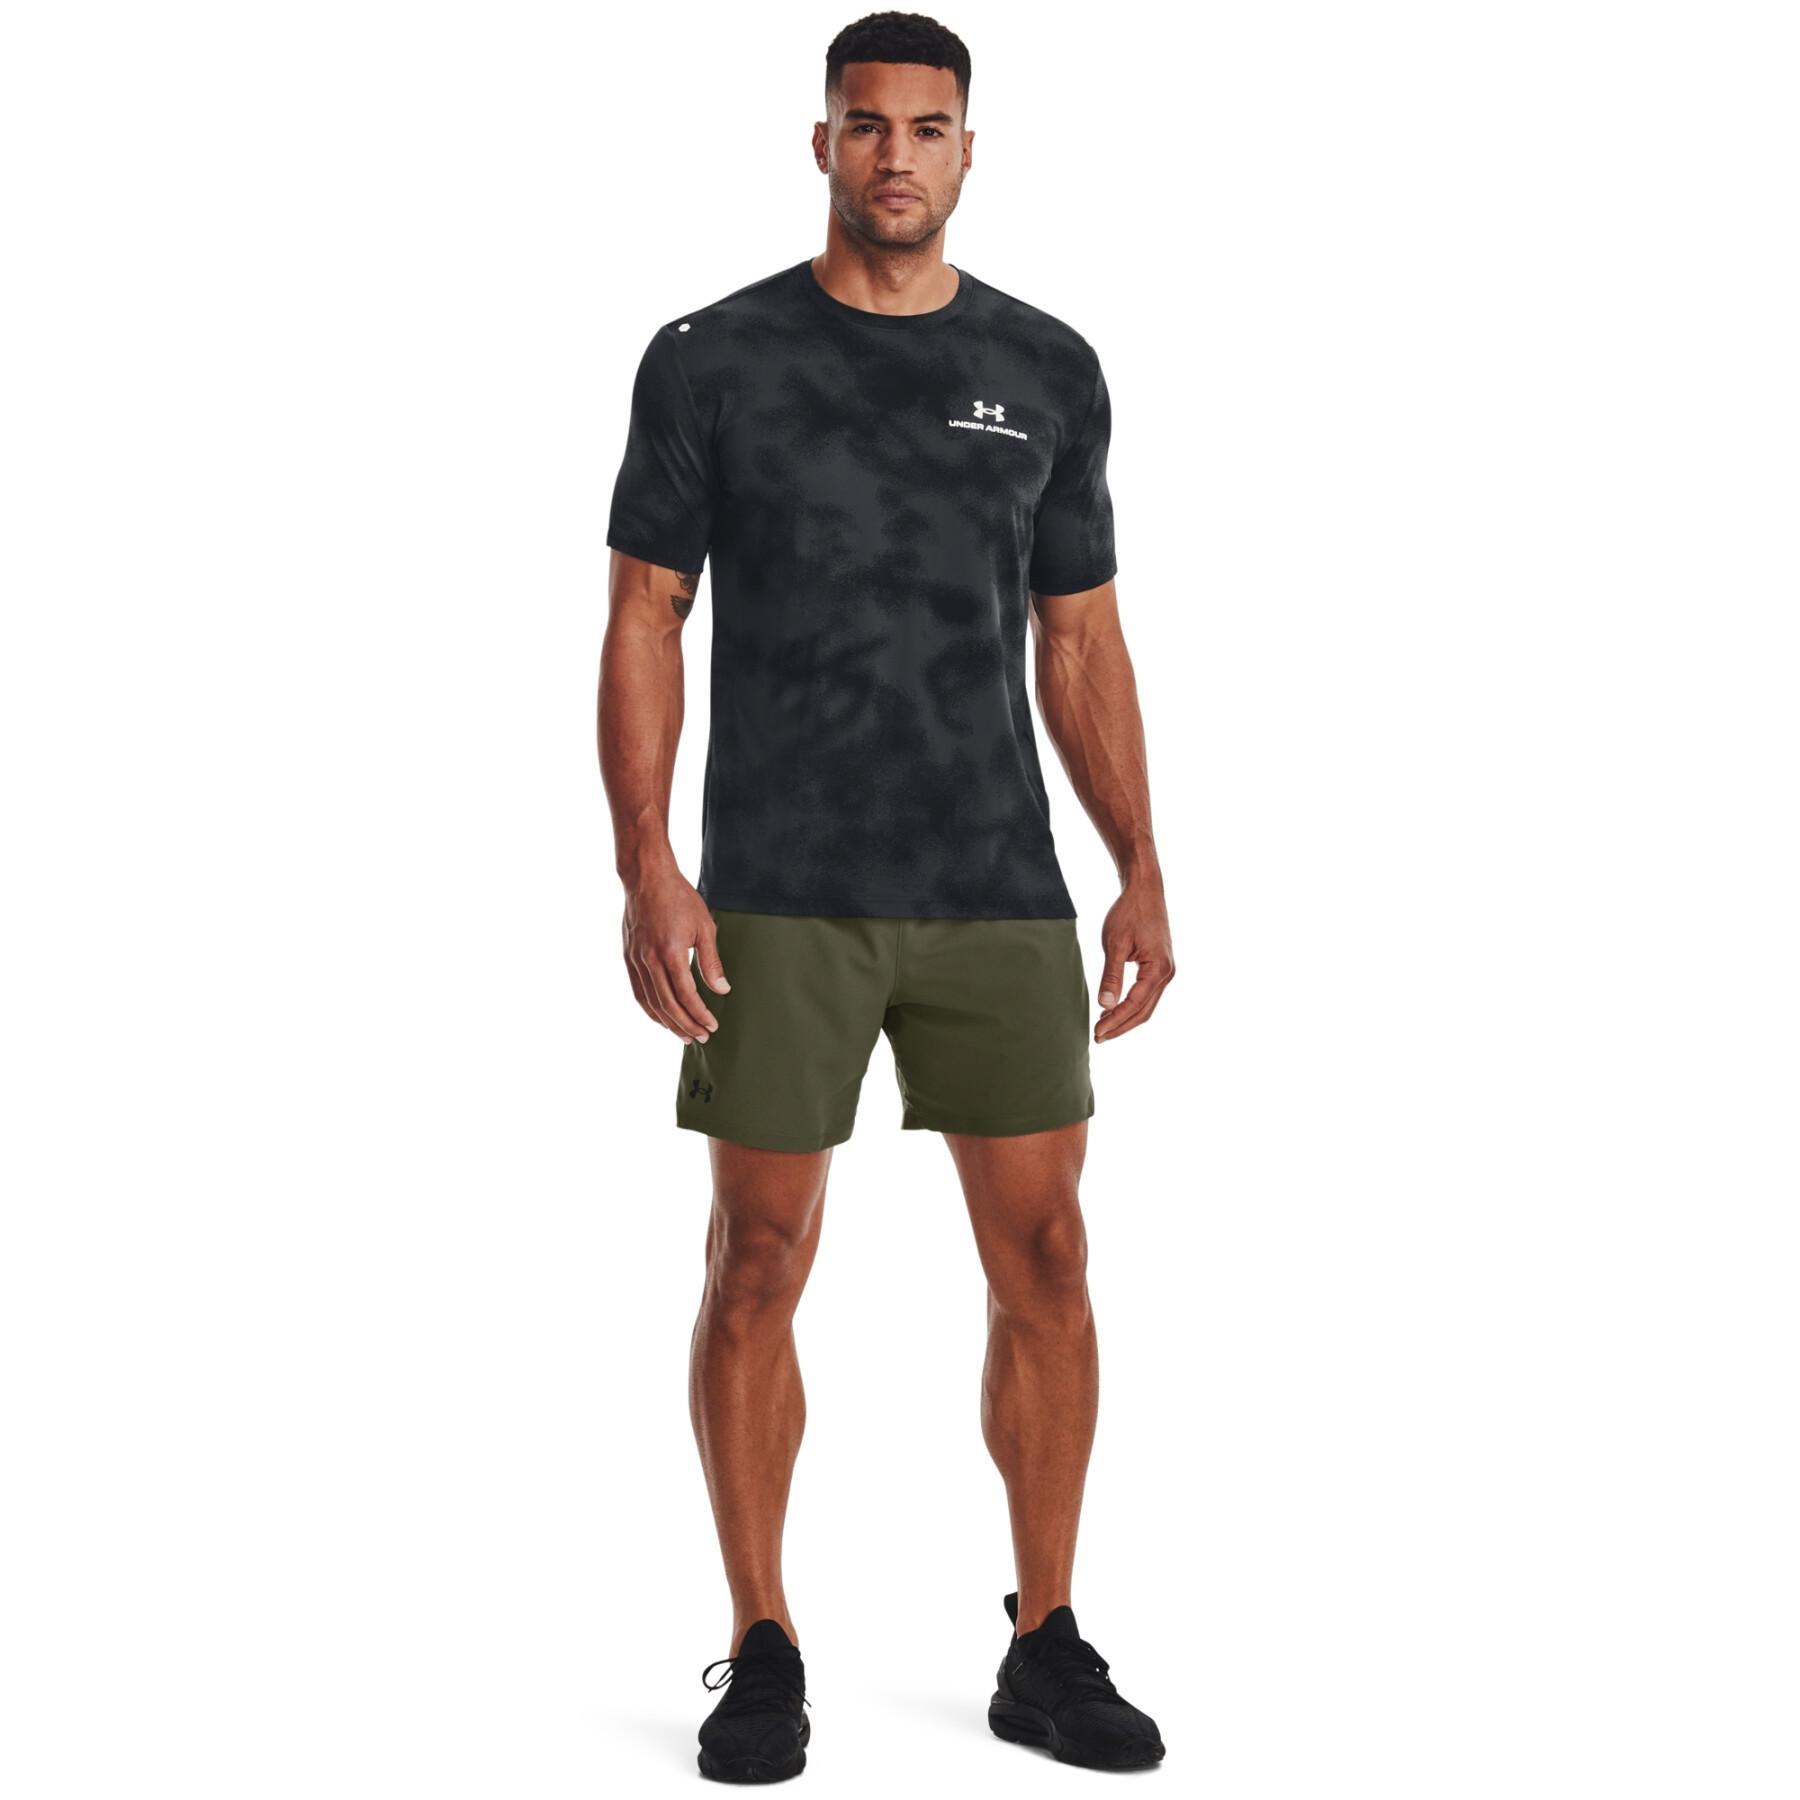 Woven shorts Under Armour Vanish 26 cm